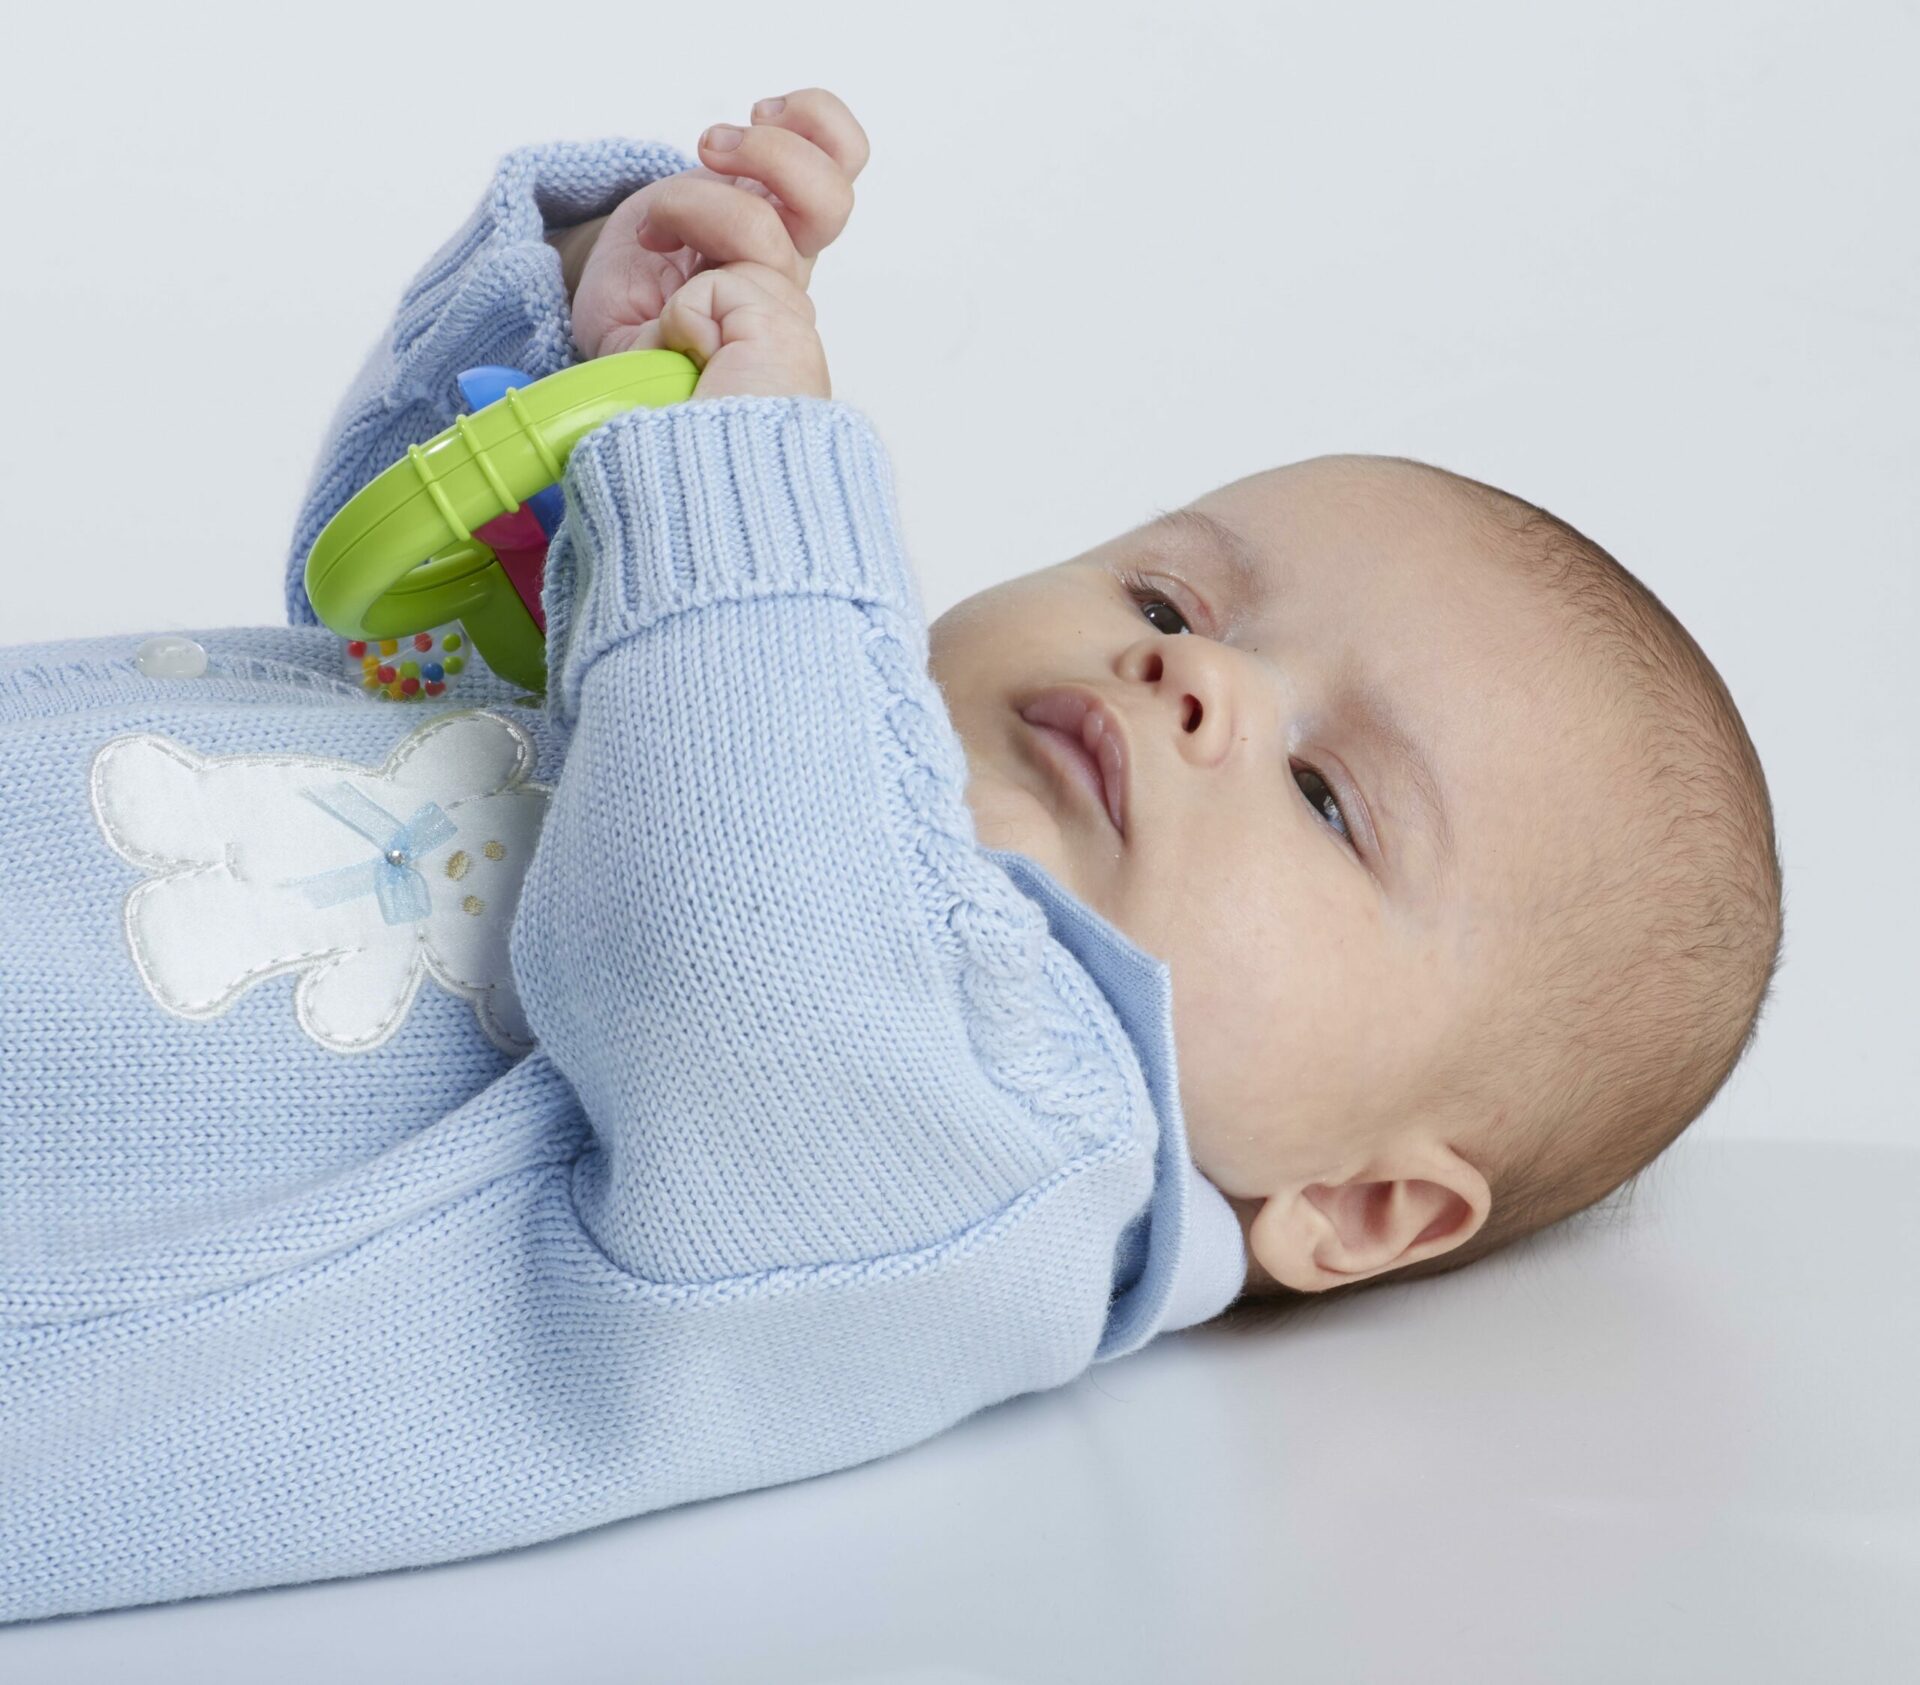 Do Babies Sleep More After Shots